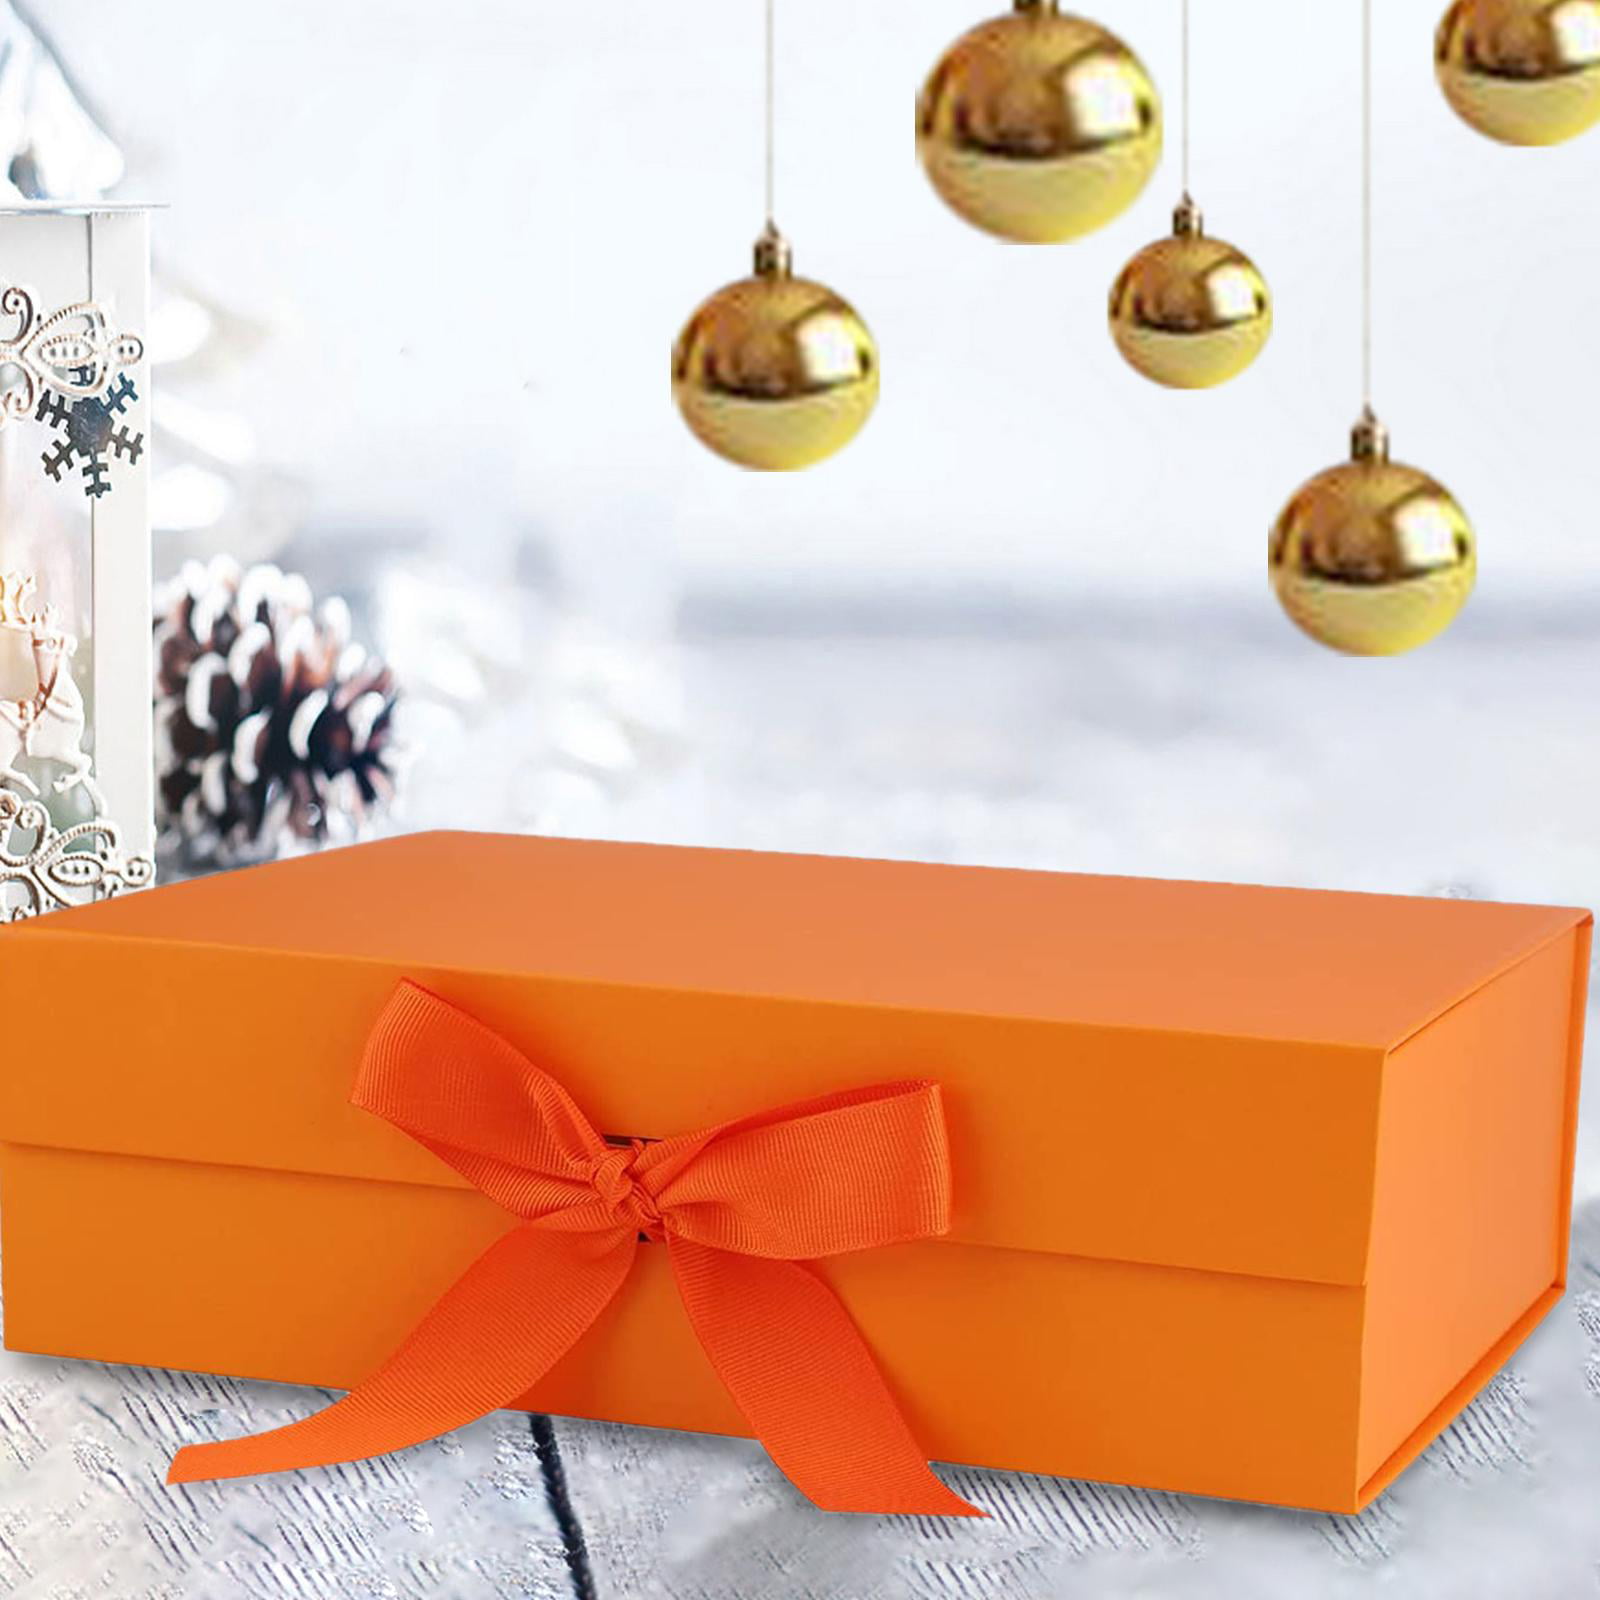  SDHENAILIAN Gift Boxes Gift Box Wrapping Box Orange